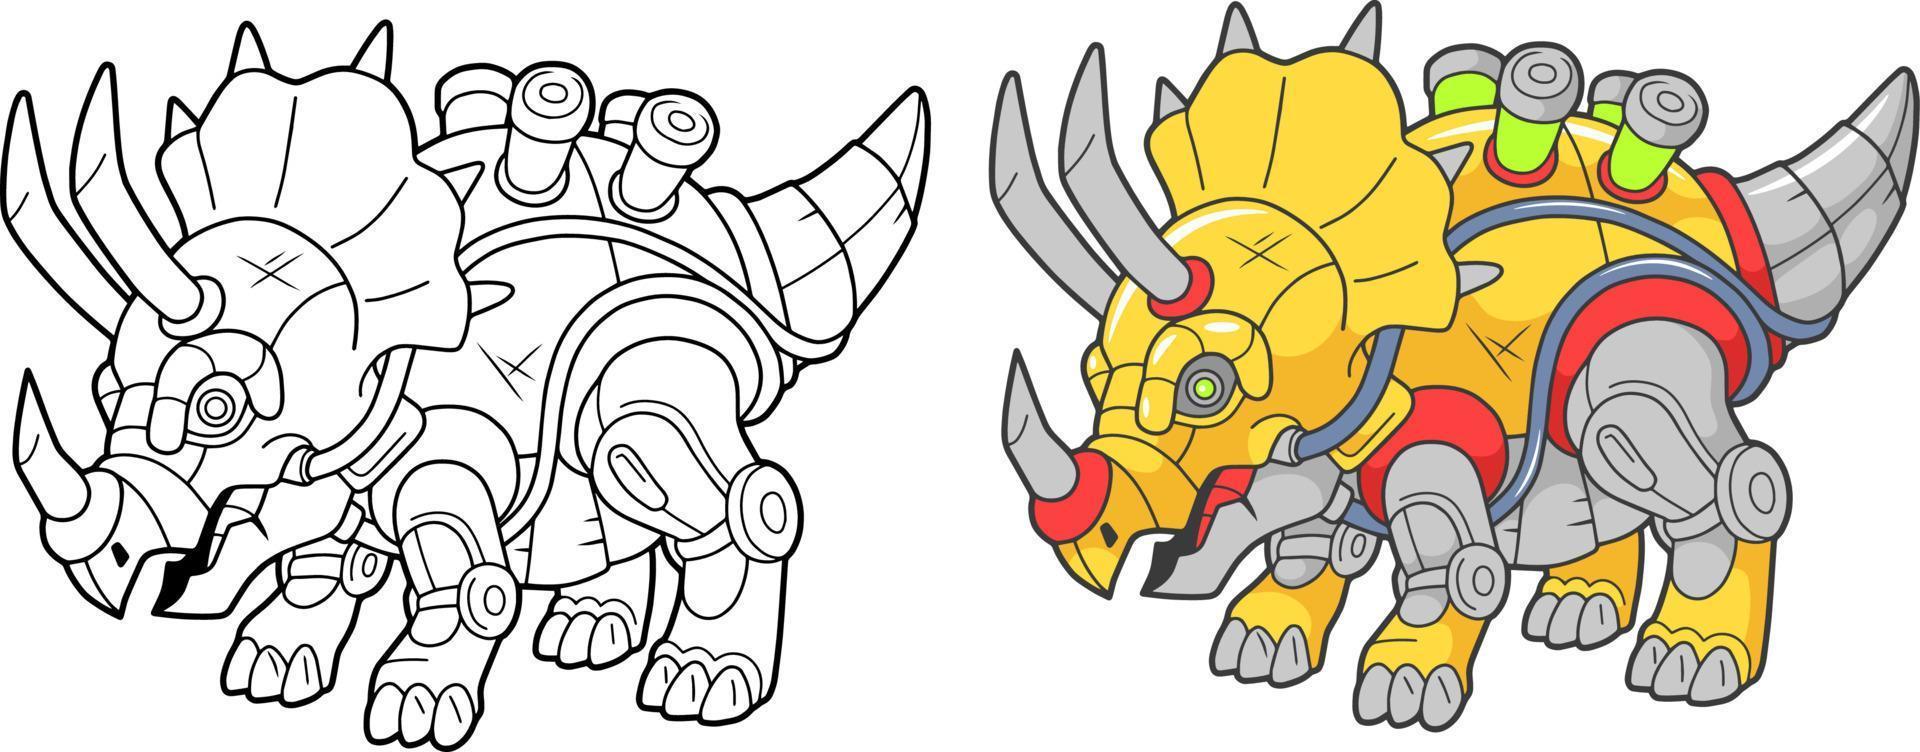 cartoon robot dinosaur triceratops, coloring book, funny illustration vector